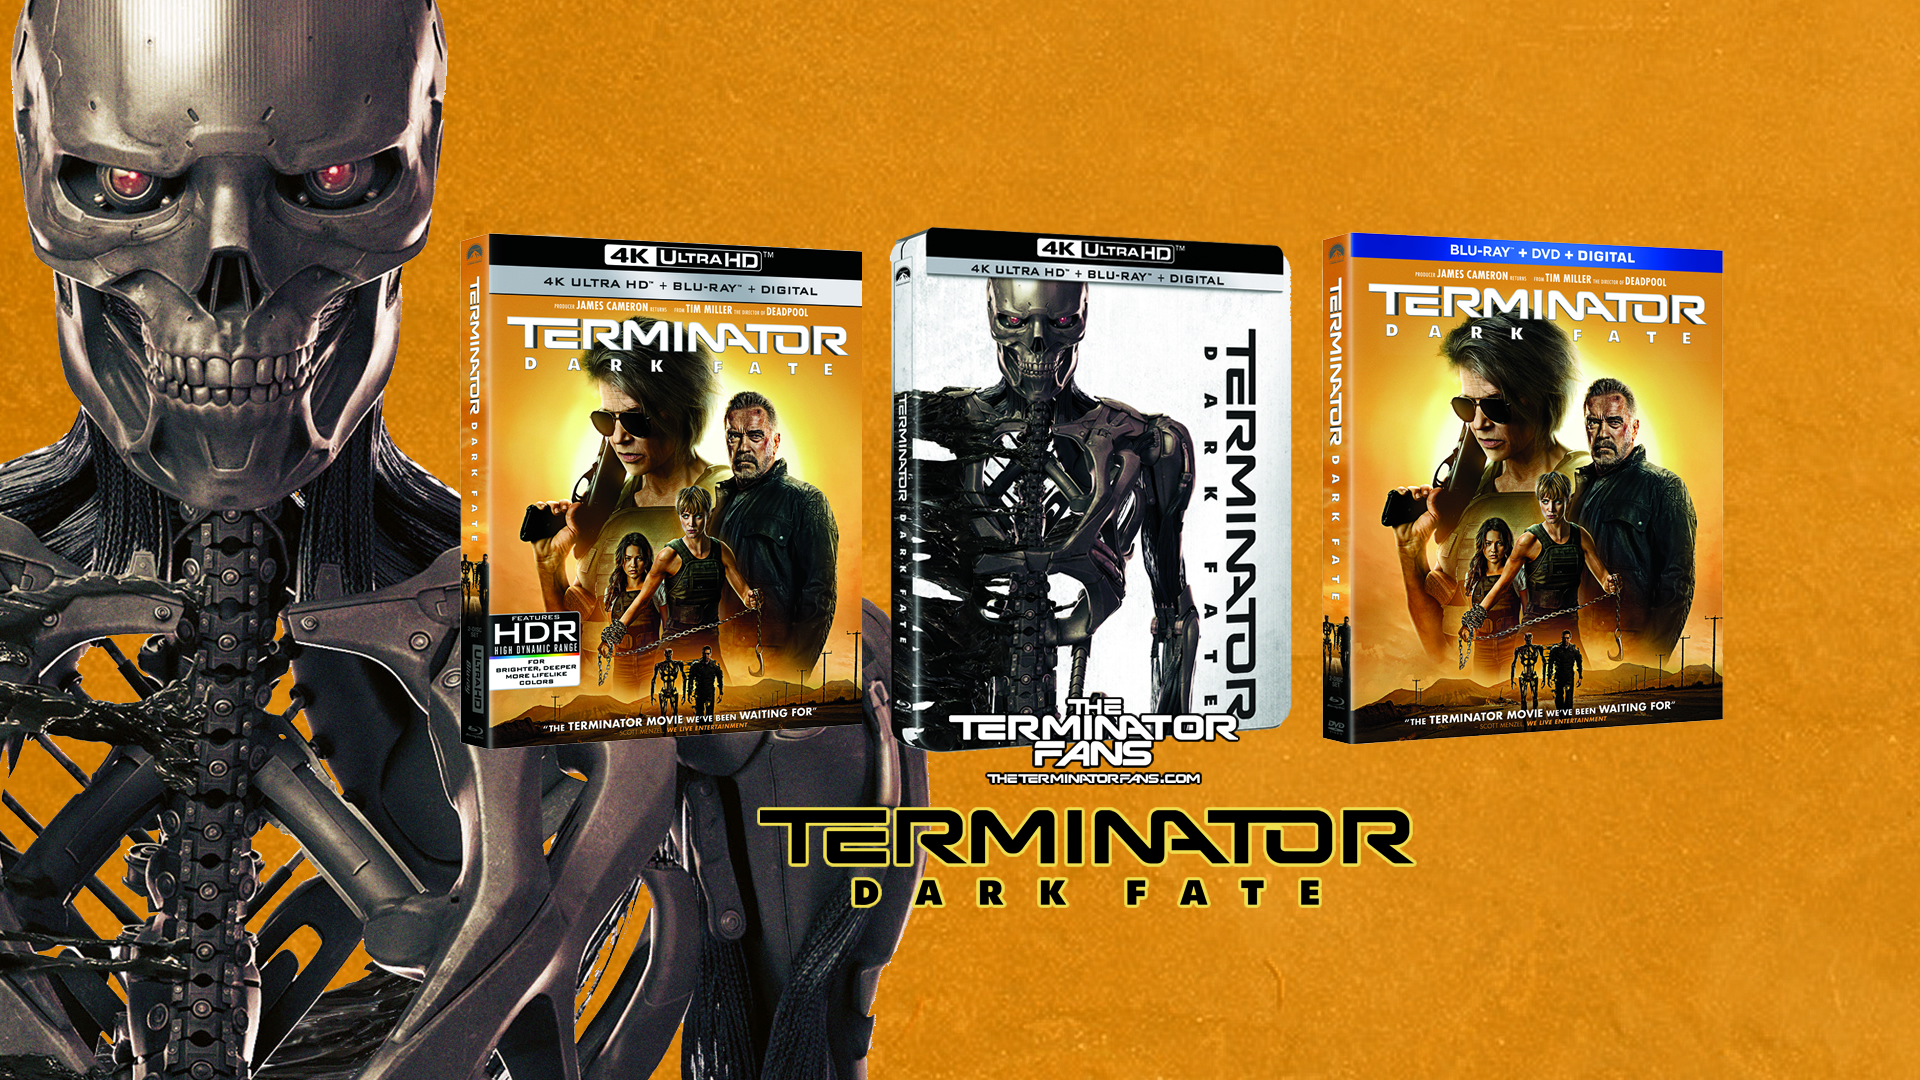 Terminator Dark Fate 4k Uhd Blu Ray And Dvd Home Release Theterminatorfans Com